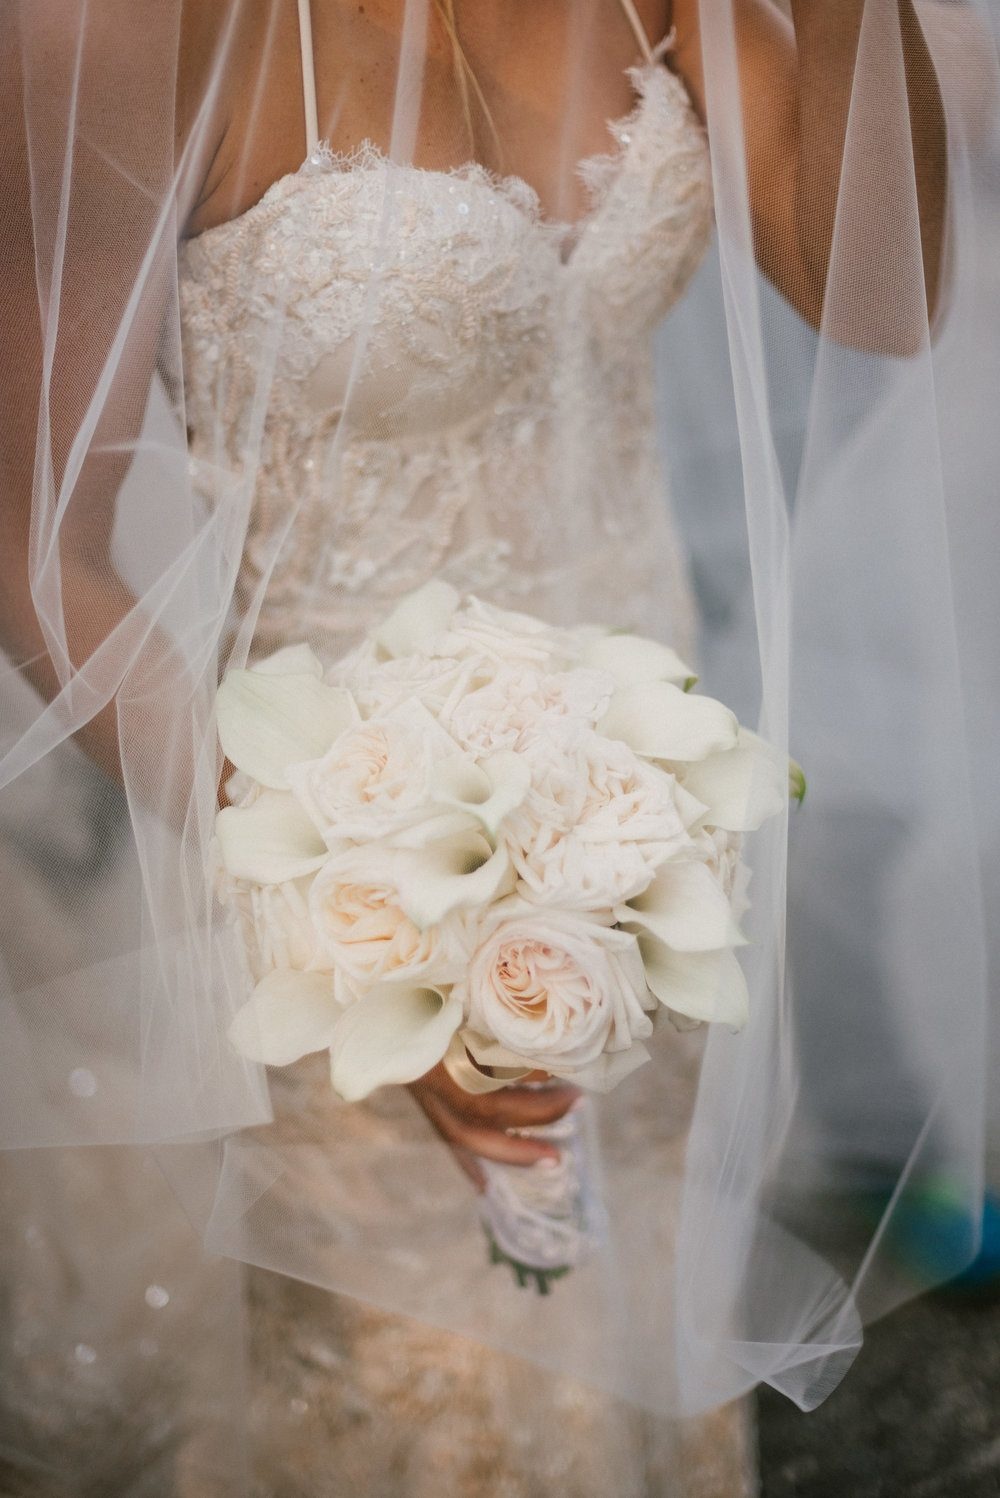 https://0201.nccdn.net/4_2/000/000/023/130/industrial-wedding-vibes-miami-nuptials-05-1000x1498.jpg